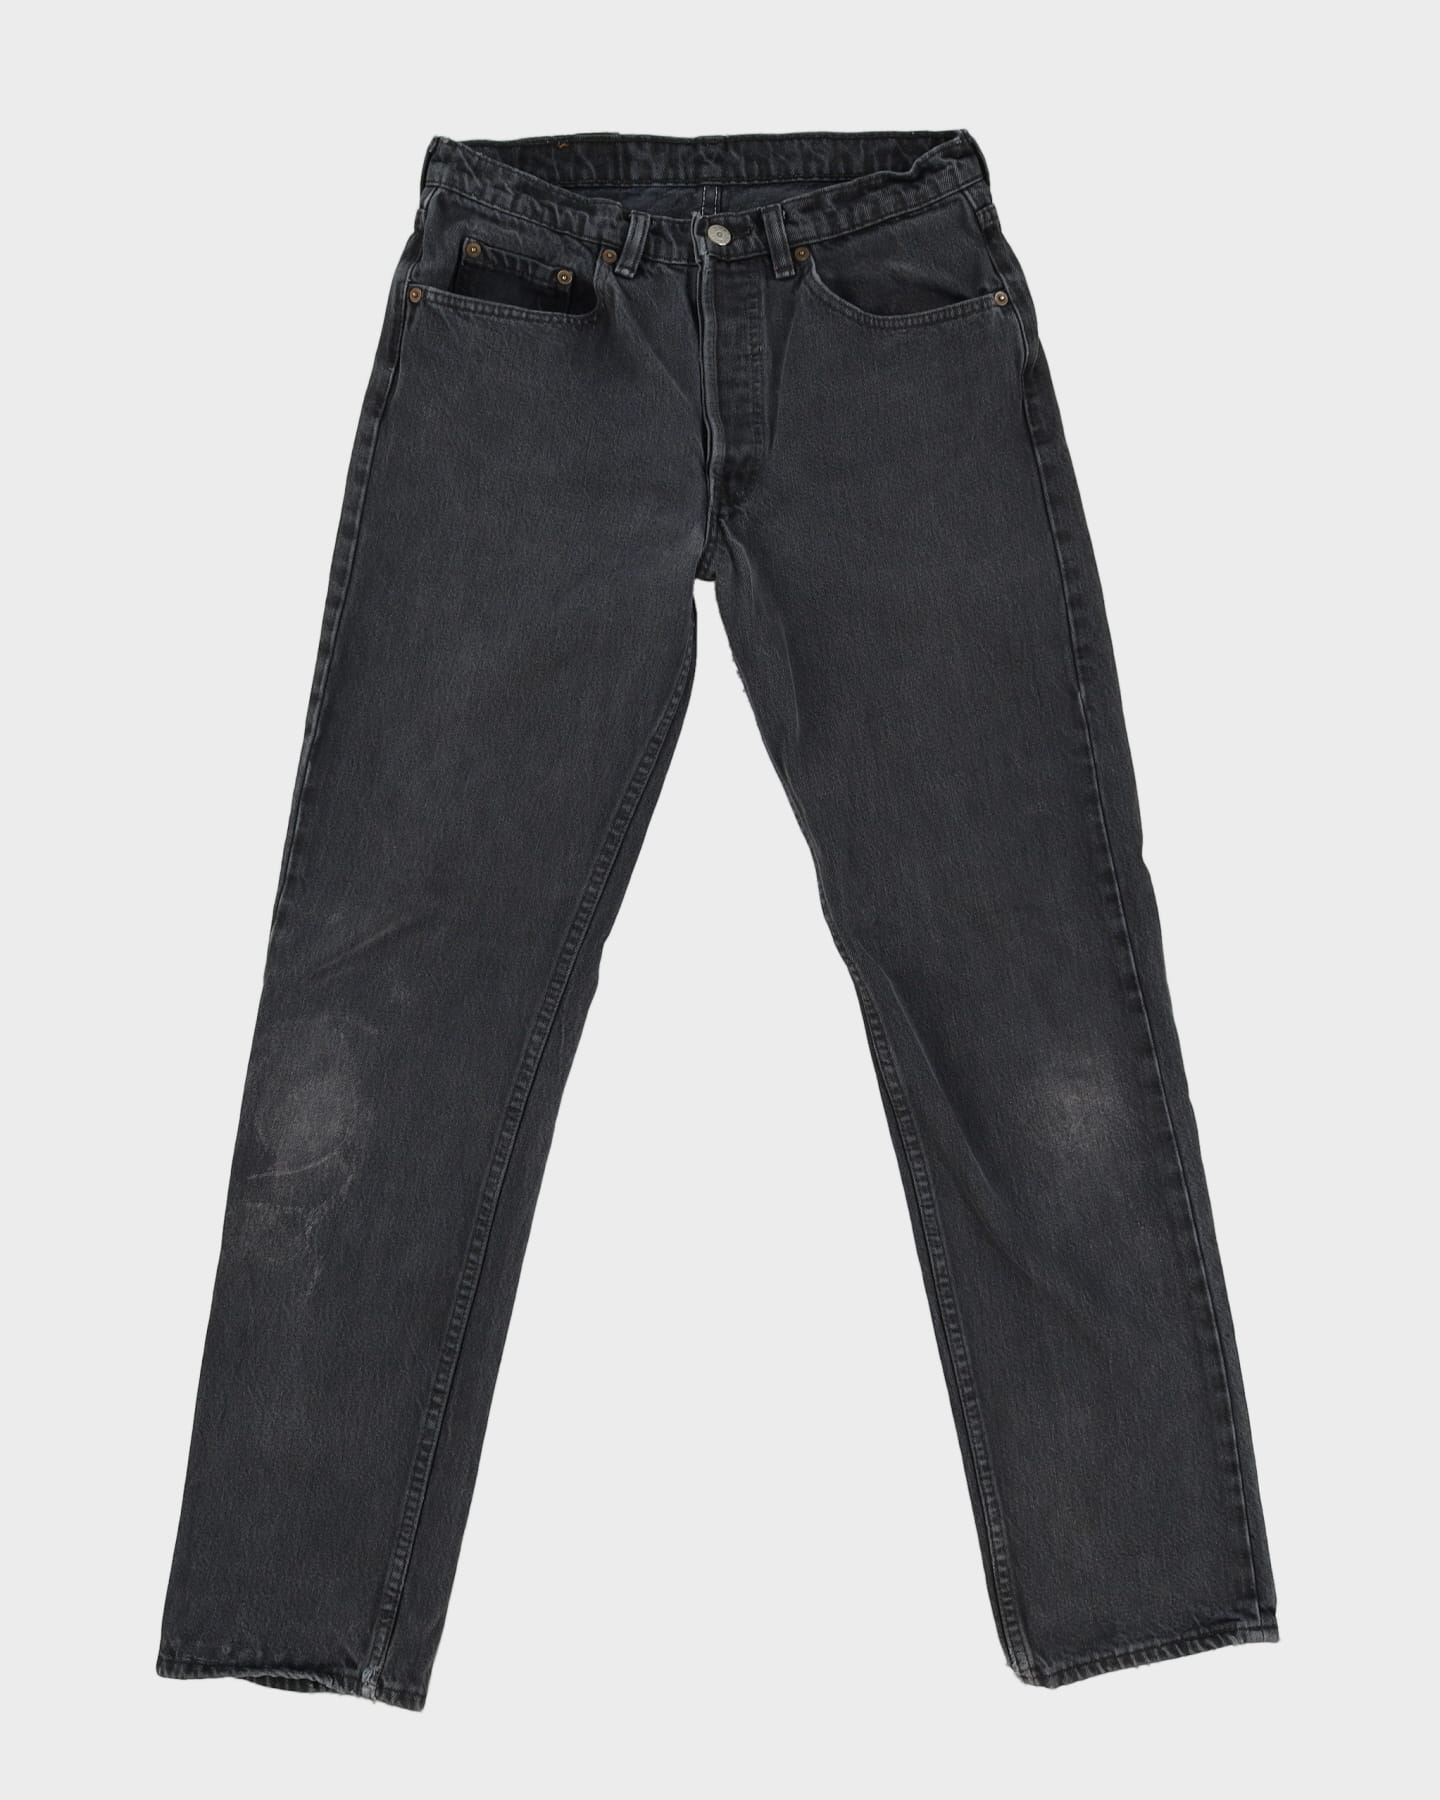 Vintage 80s Levi's 501 Dark Wash Jeans - W30 L32